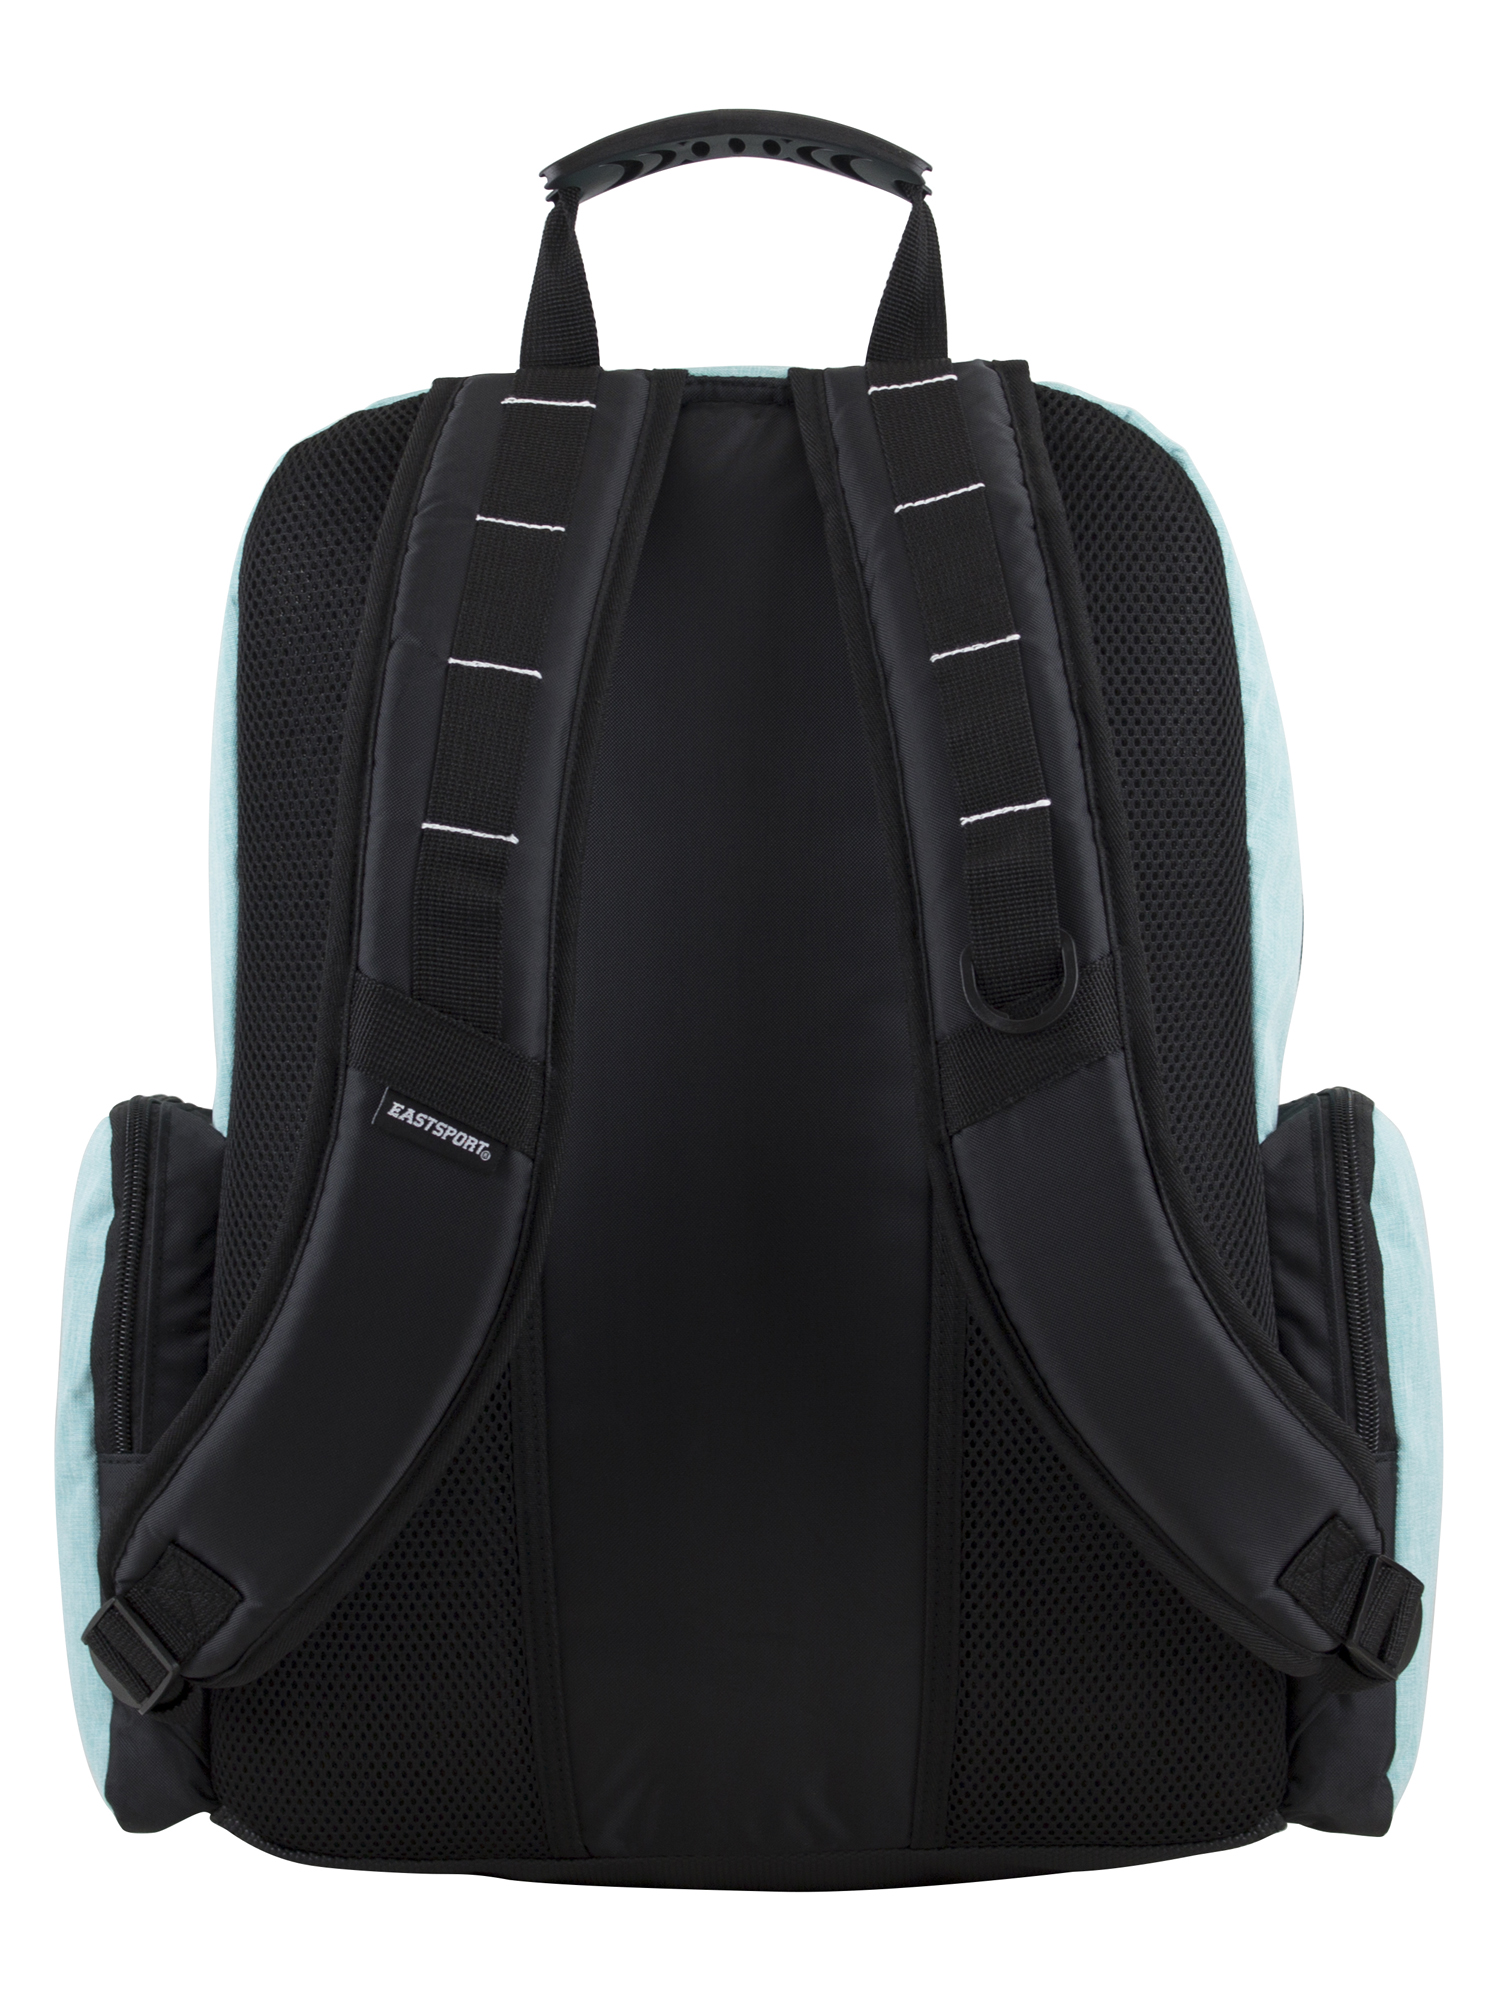 Eastsport Unisex Optimus Backpack, Mint - image 2 of 8